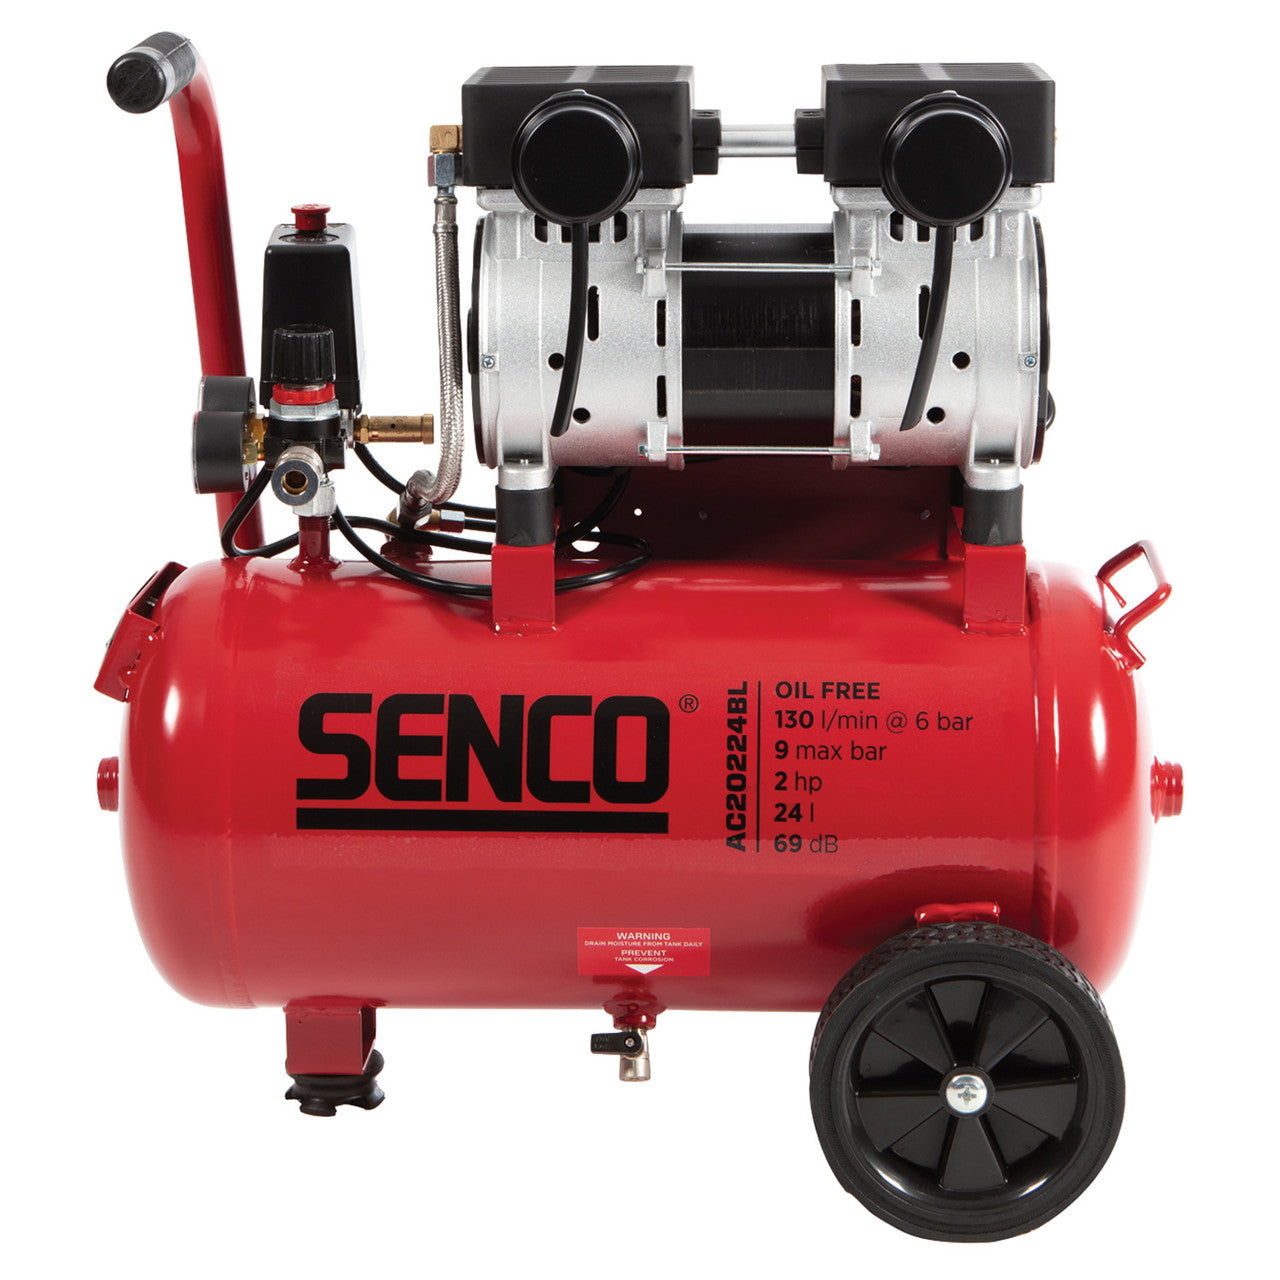 Senco AC20224BL Low Noise Compressor 24L (110V)